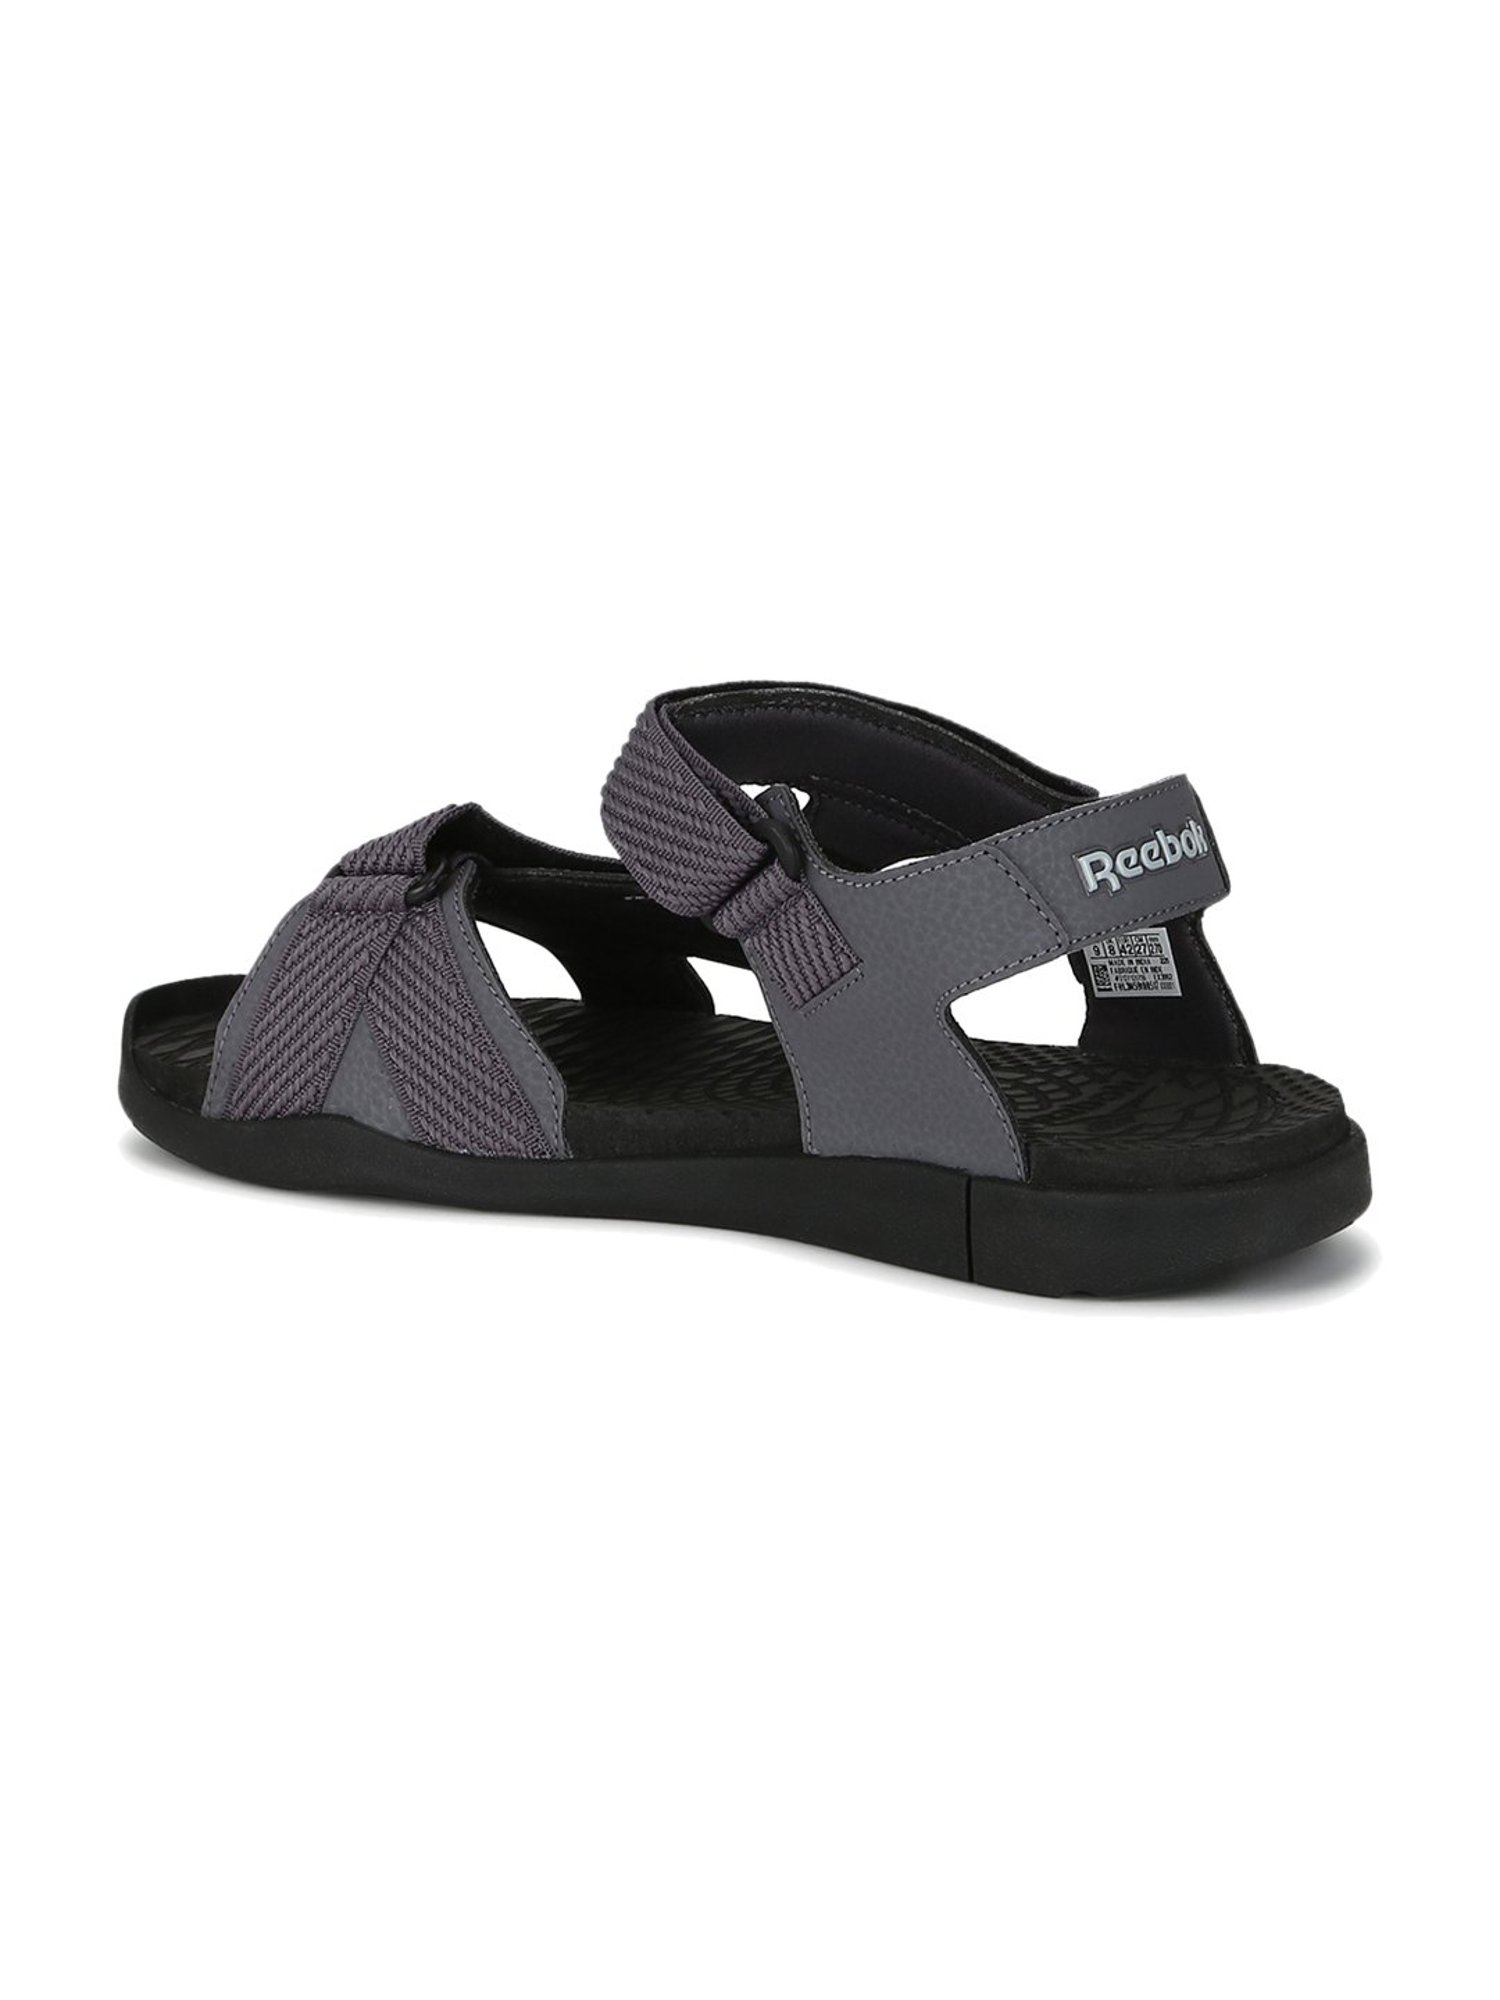 Reebok Sandals Slides Comfortable Casual Beach Shower Shoes Peach Corral  Flops | eBay